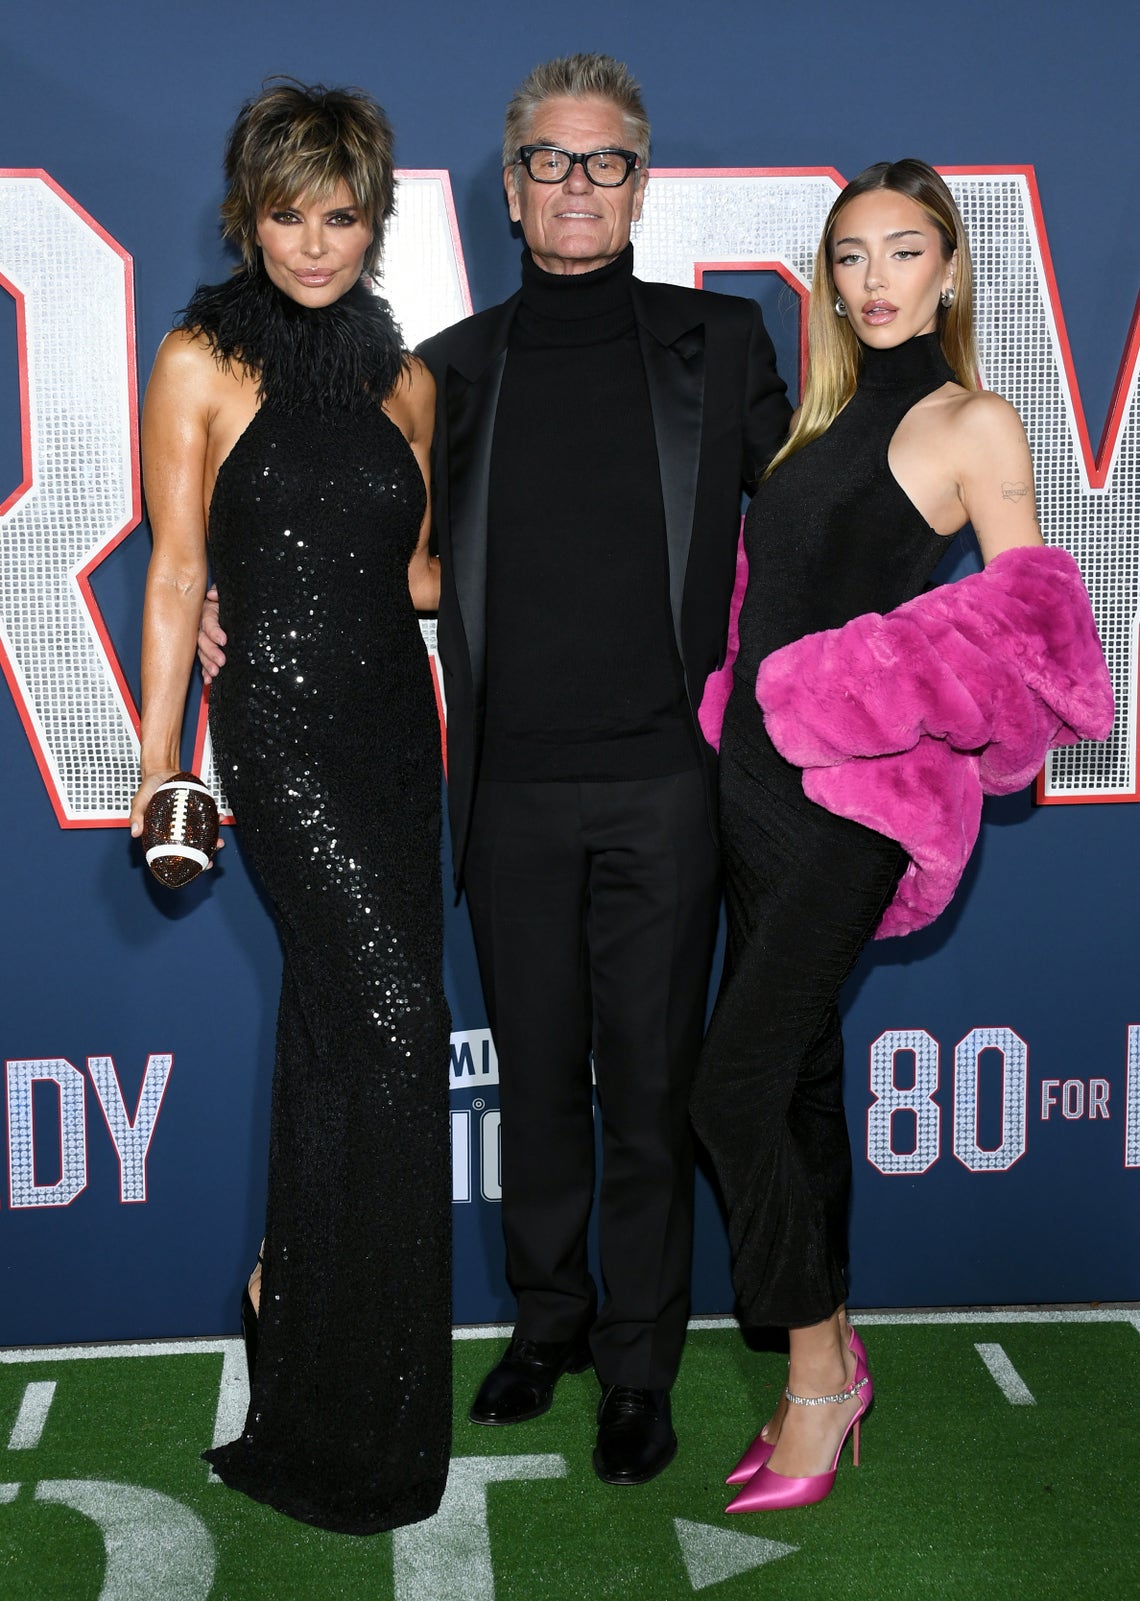 Tom Brady Attends 80 for Brady Premiere Before Retirement Reveal